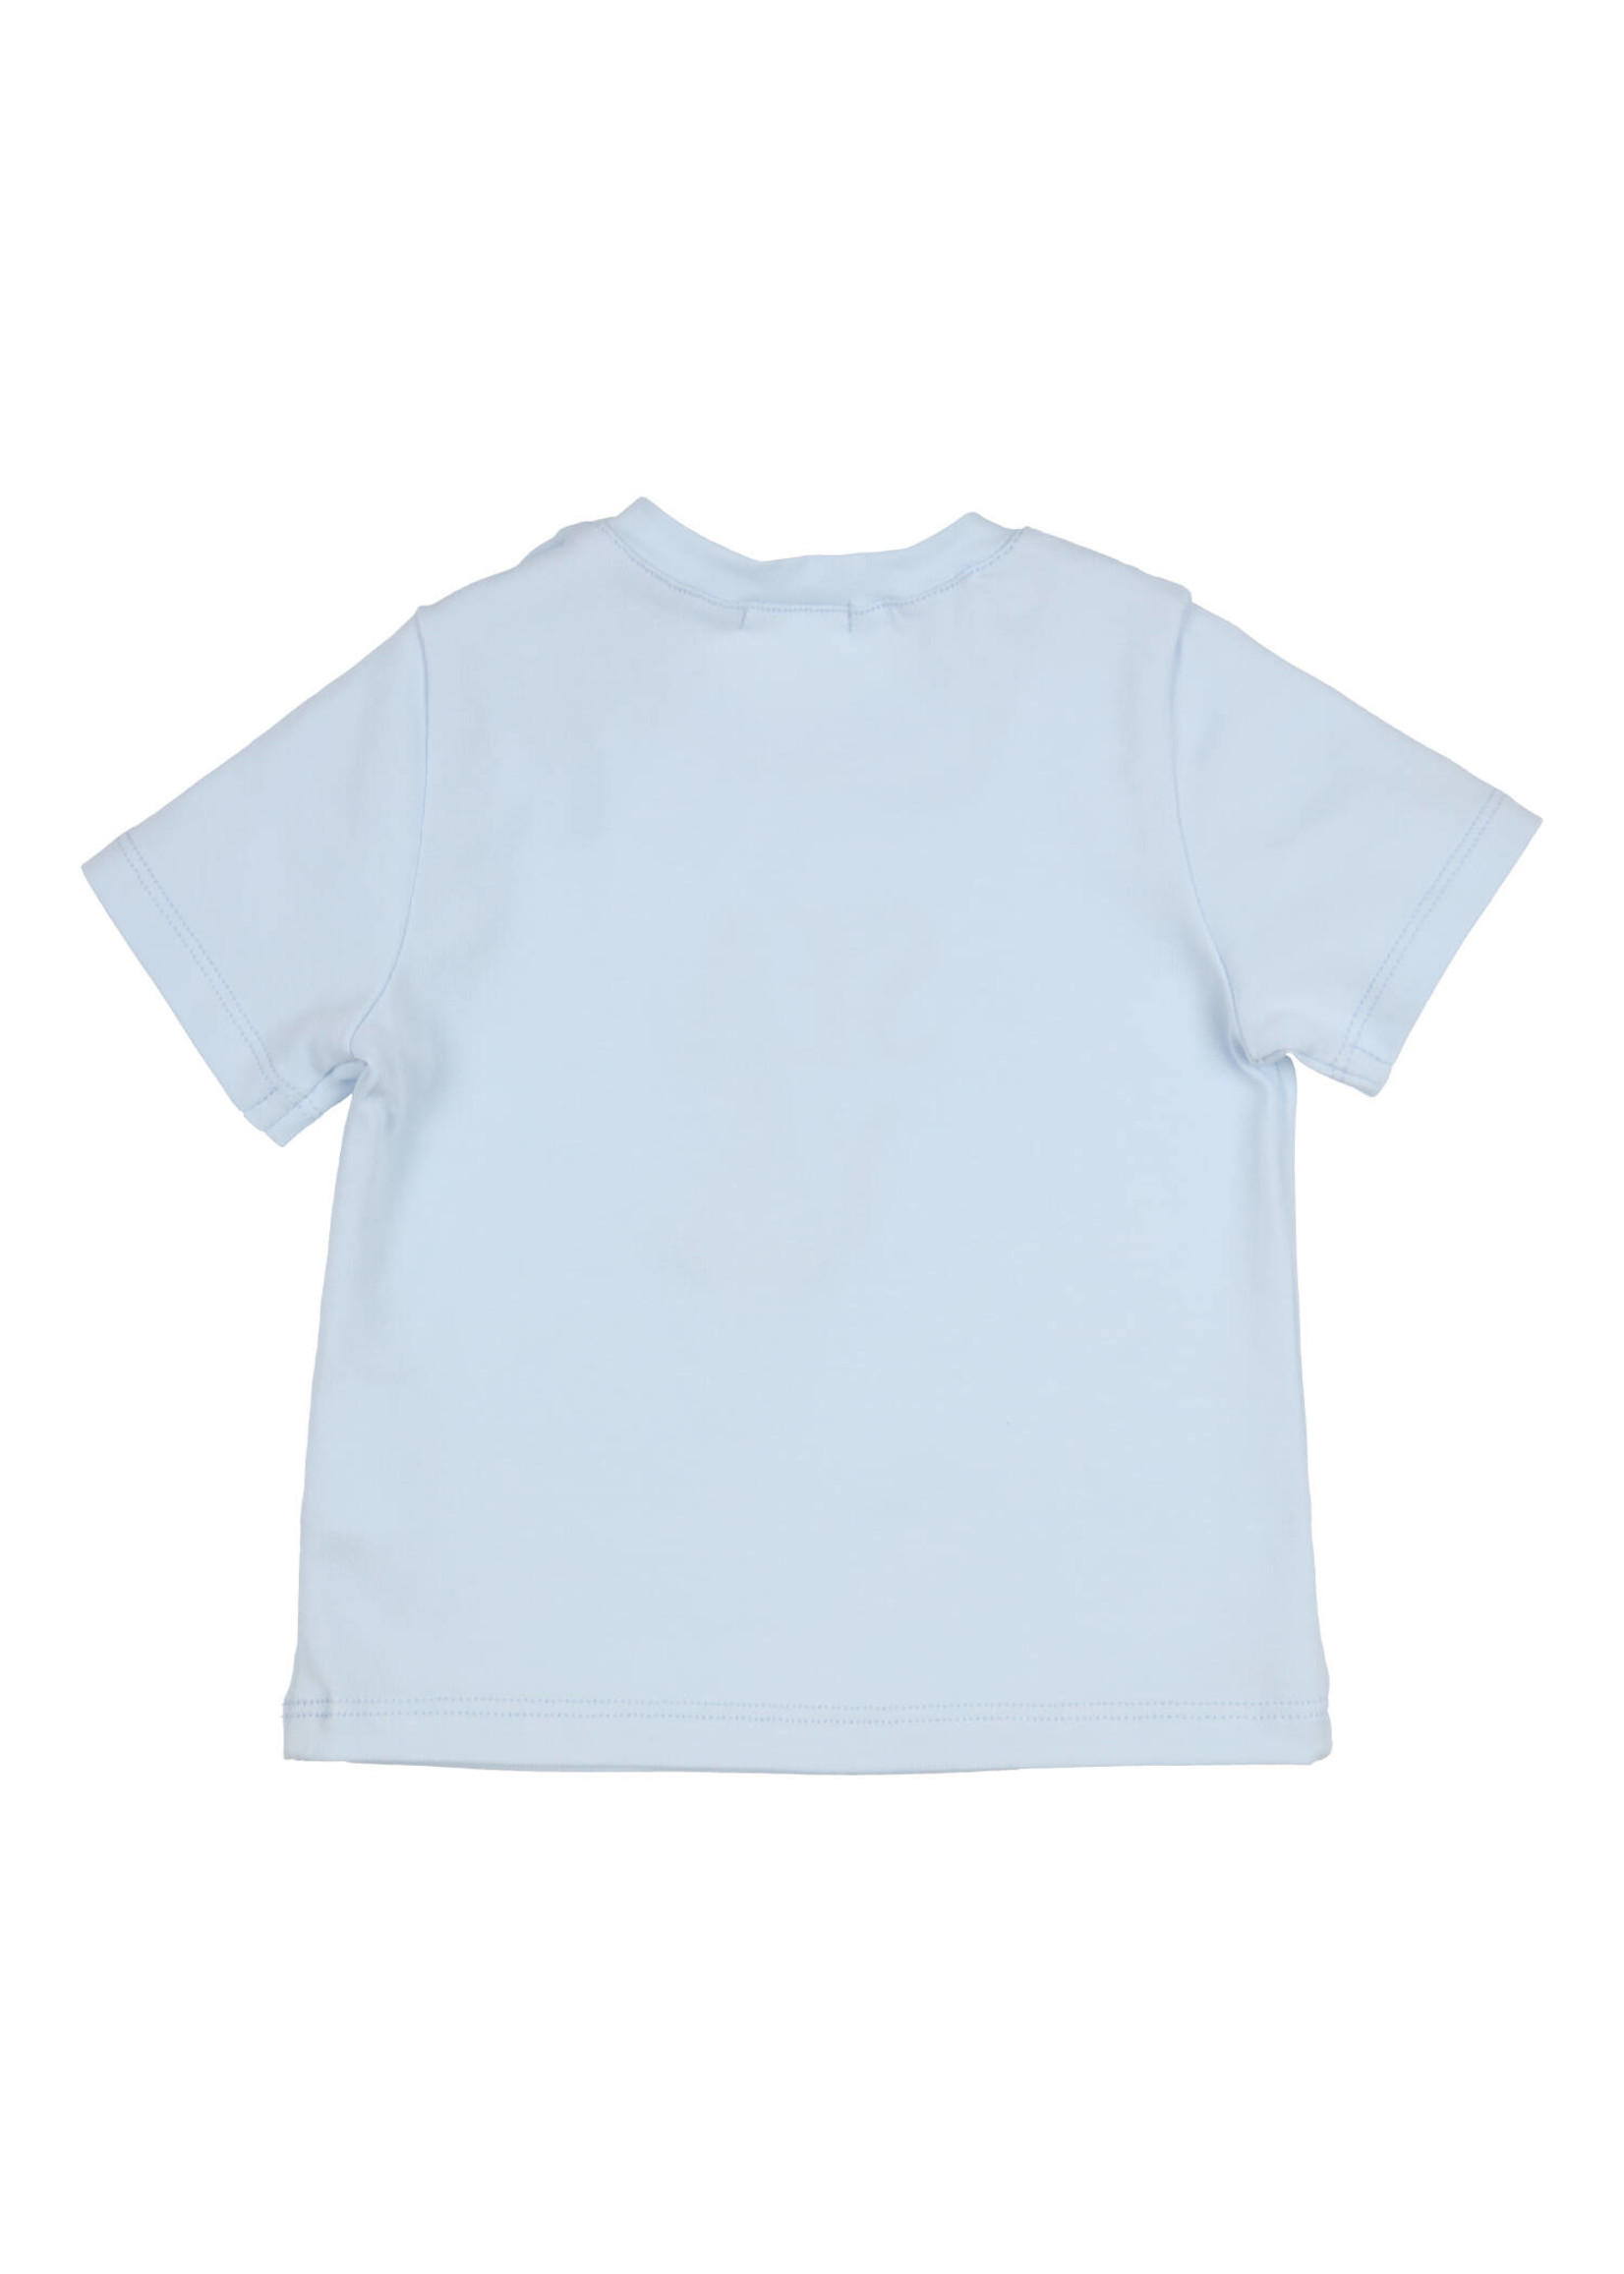 Gymp T-shirt Aerobic Light Blue 353-3254-20